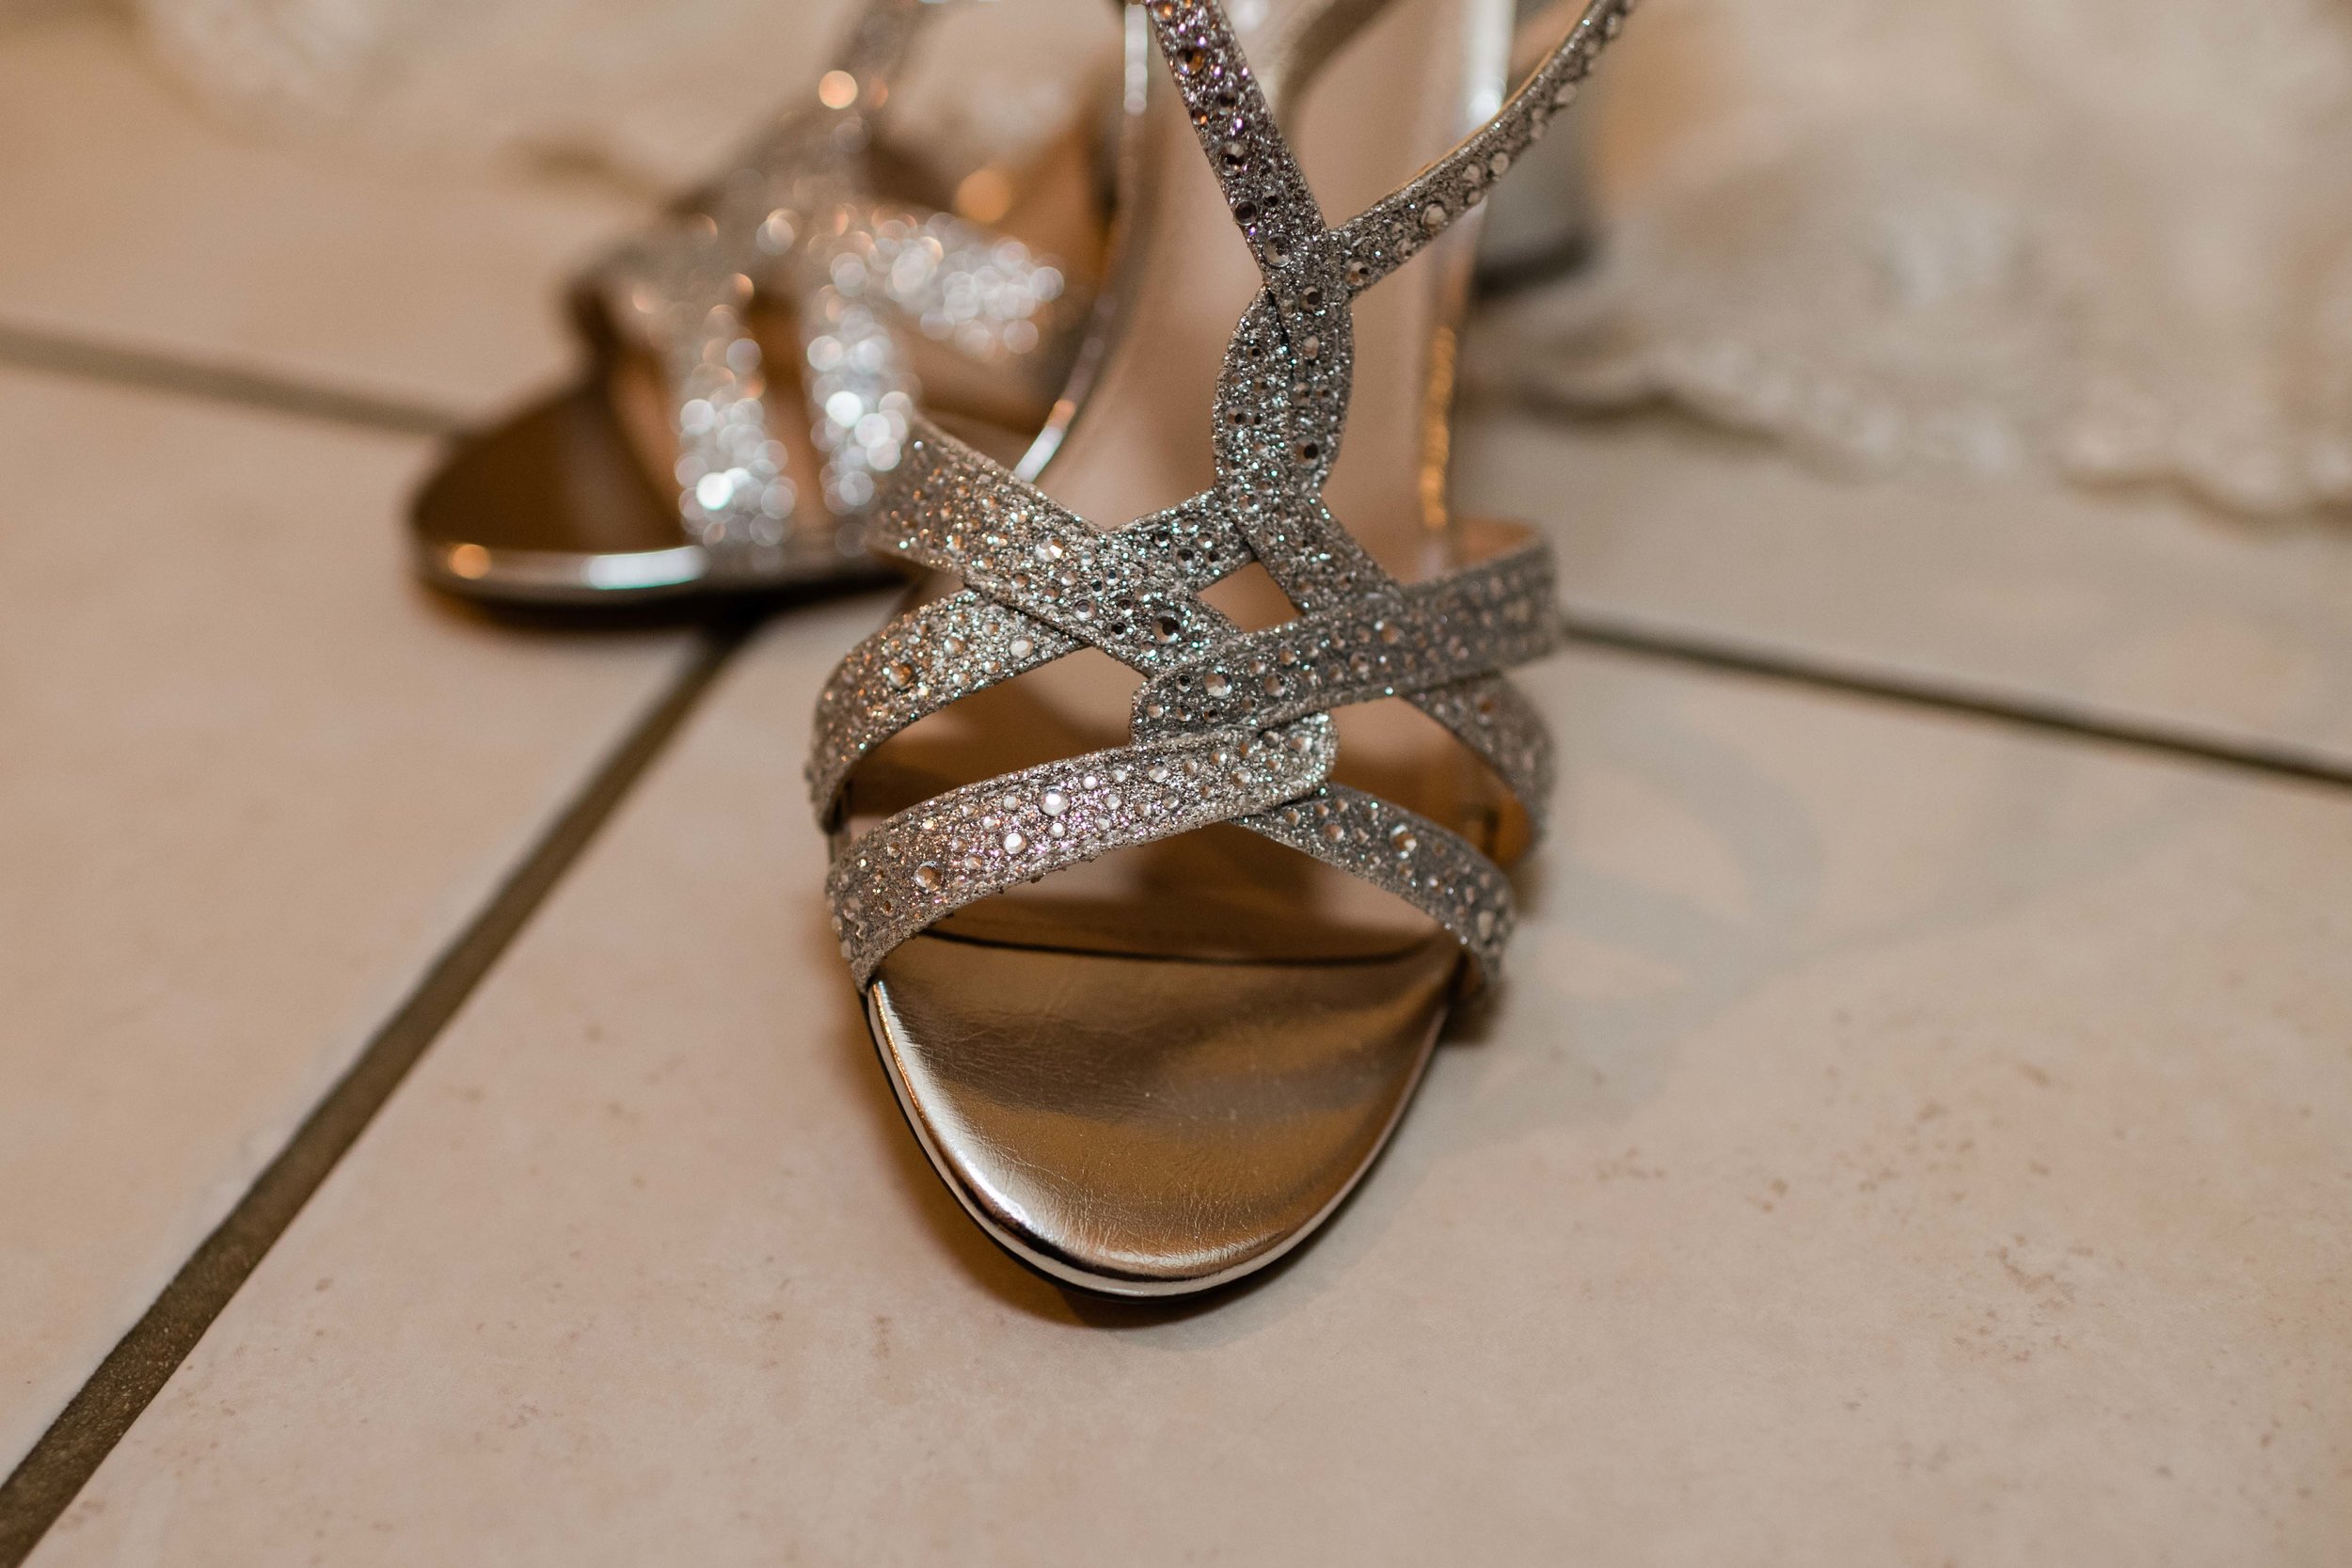 Gold bridal shoes